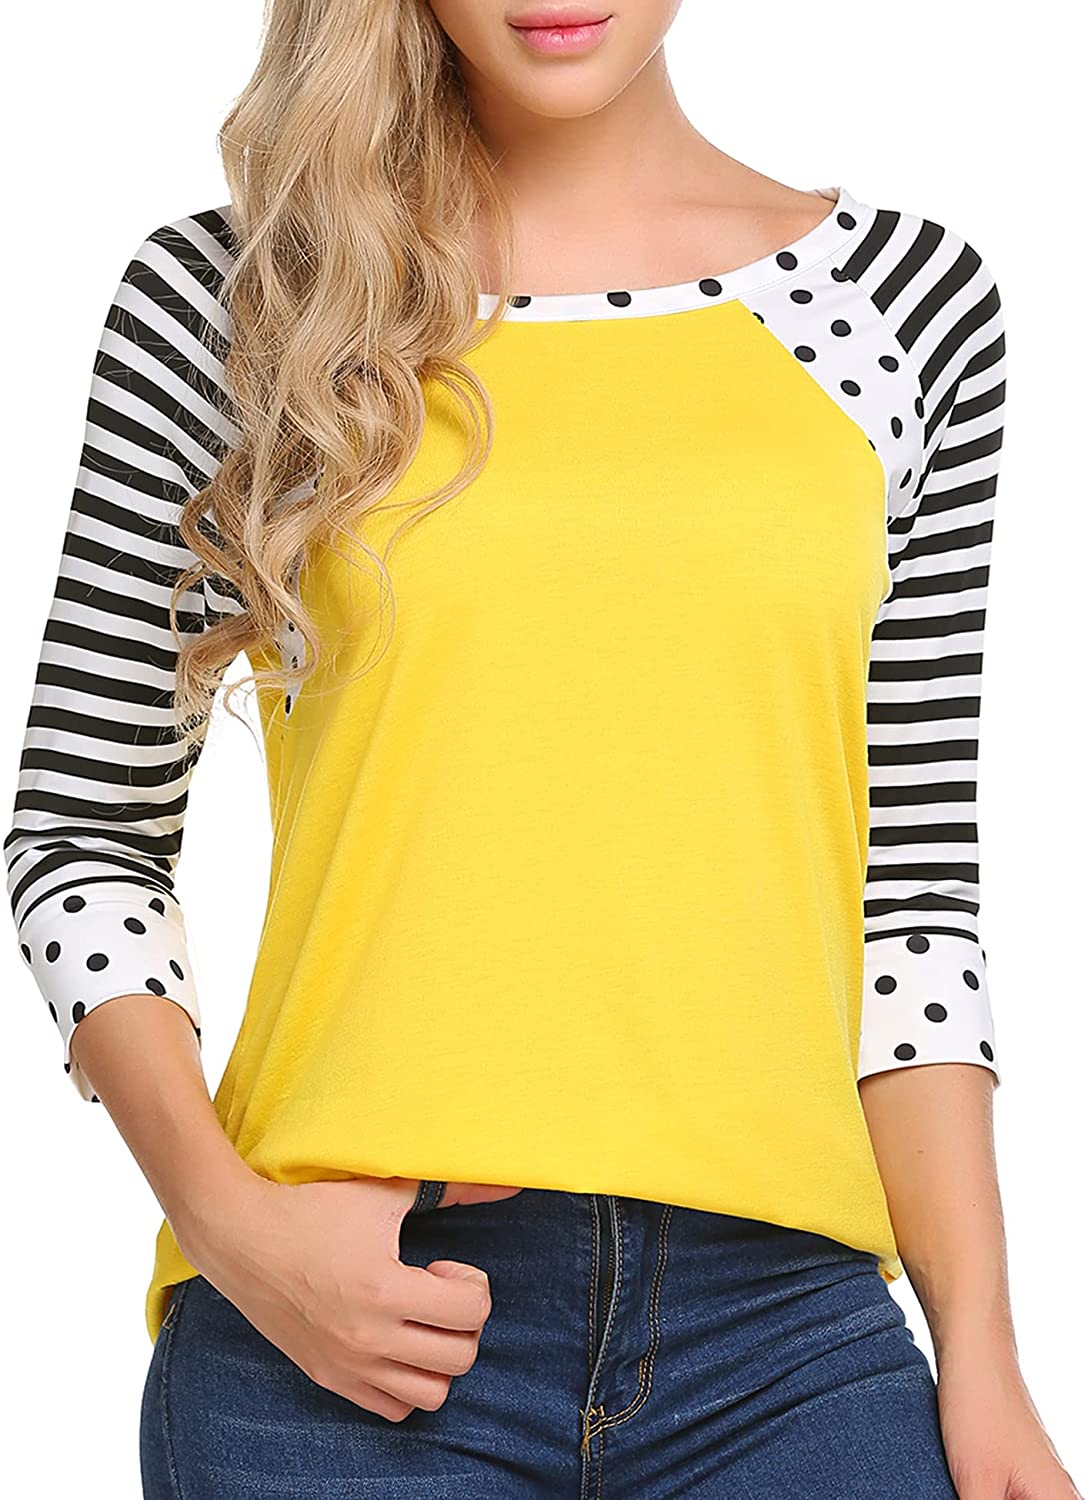 Zeagoo Women's Polka Dots Shirt Striped 3/4 Sleeve Casual Scoop 